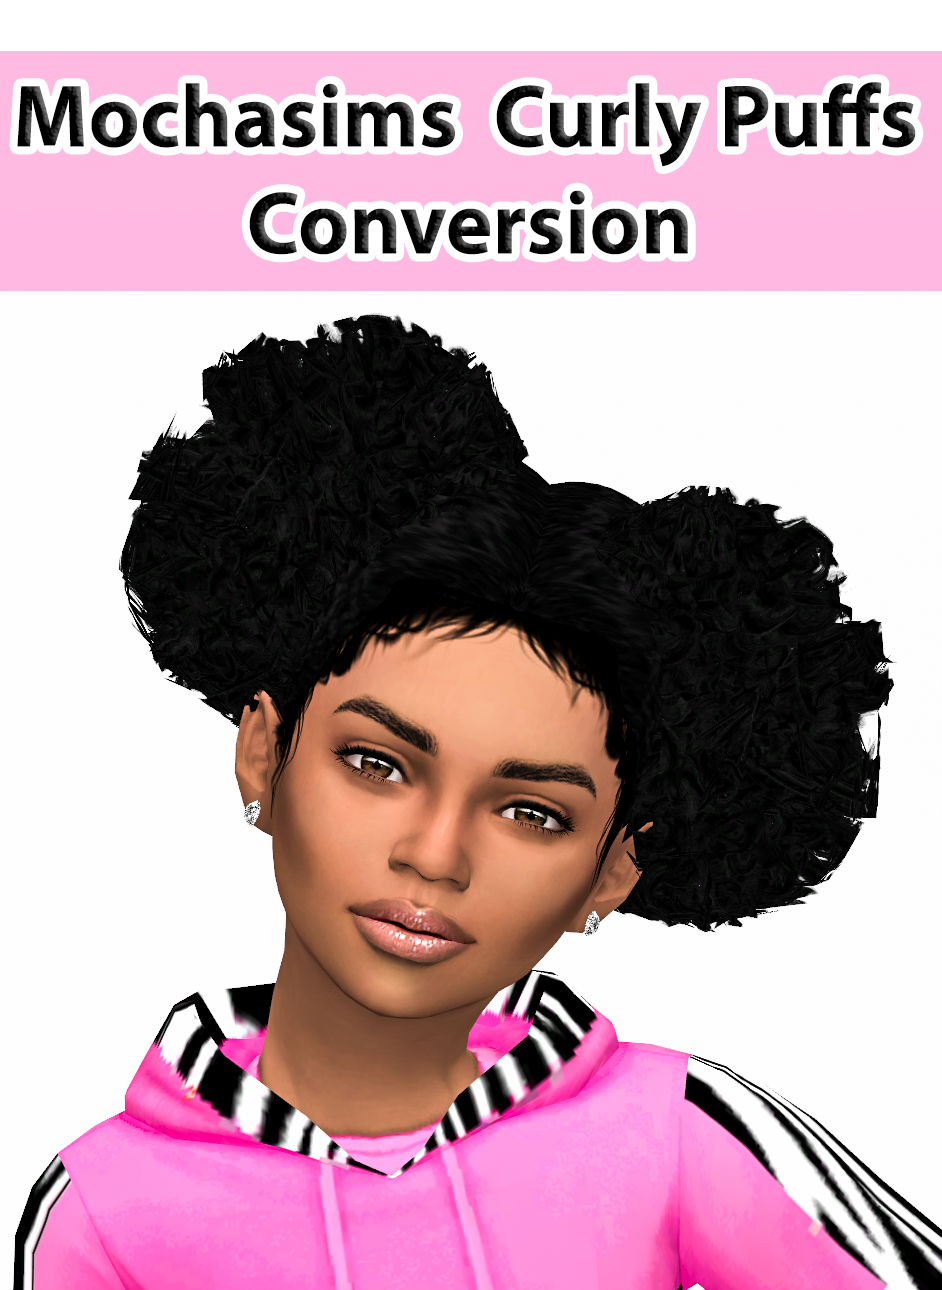 Natural Hairstyles Sims 4